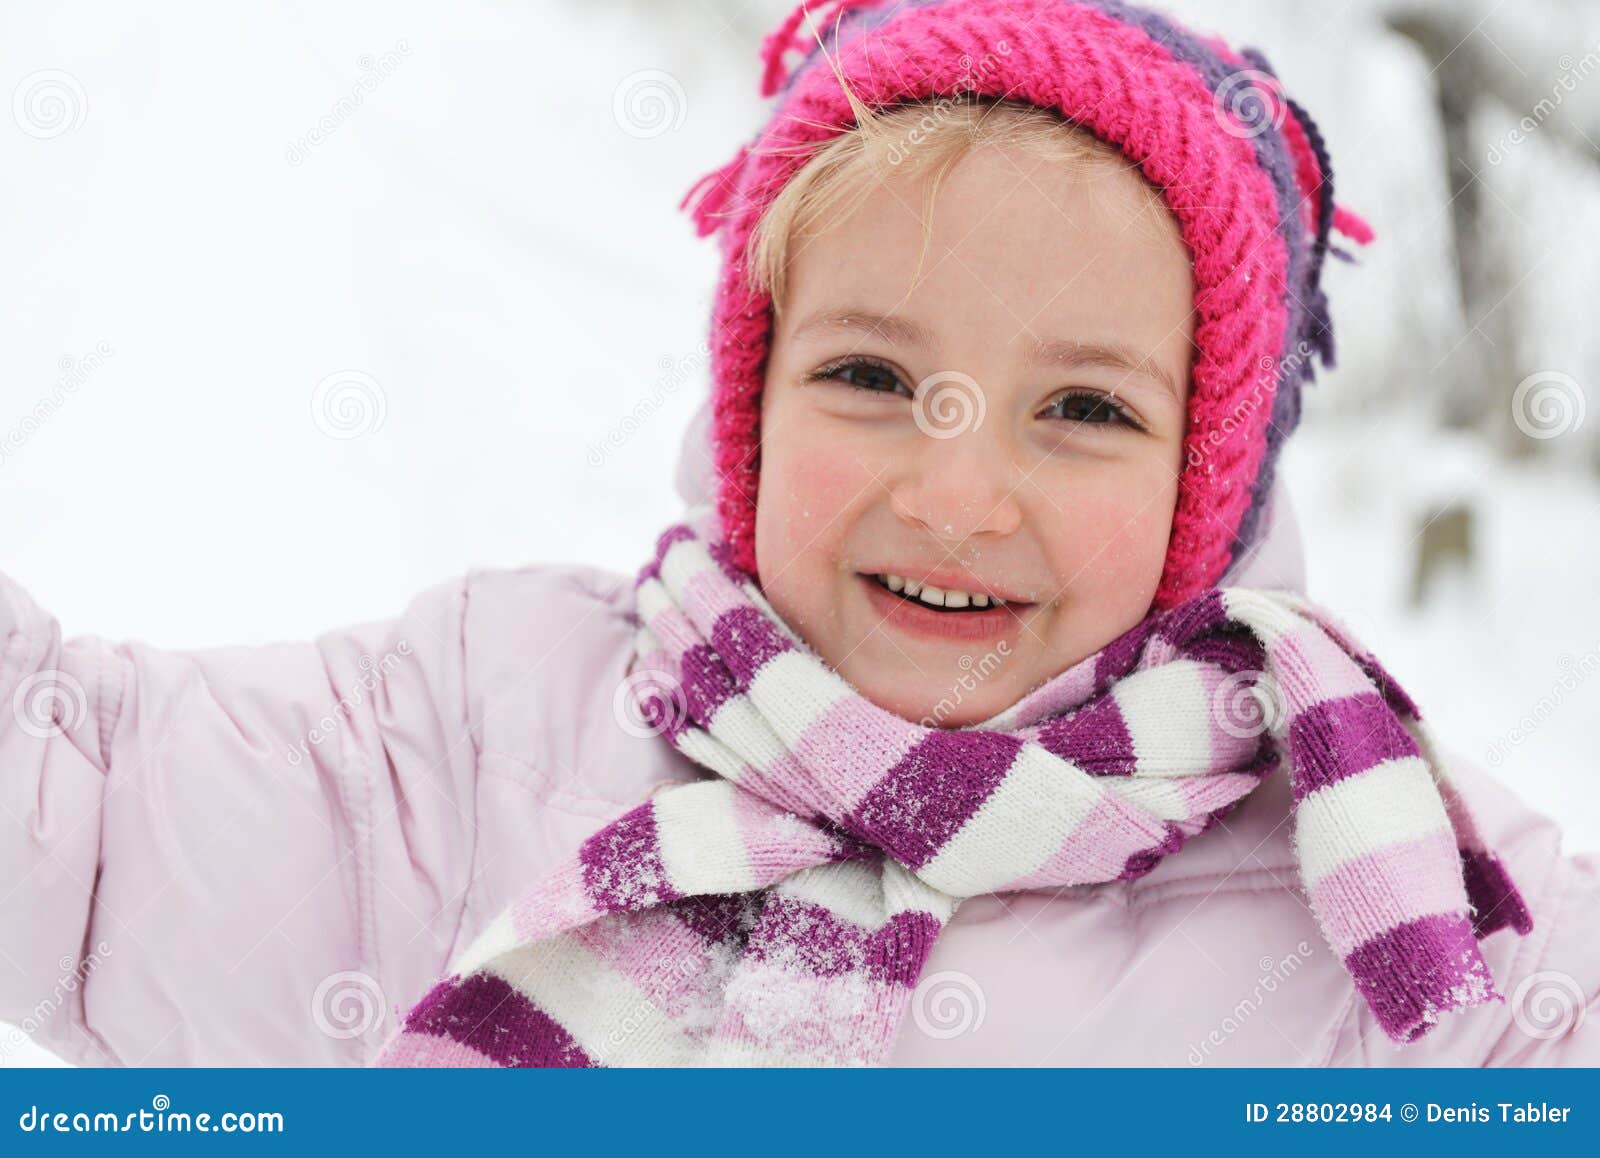 Little girl stock photo. Image of leisure, nature, girls - 28802984